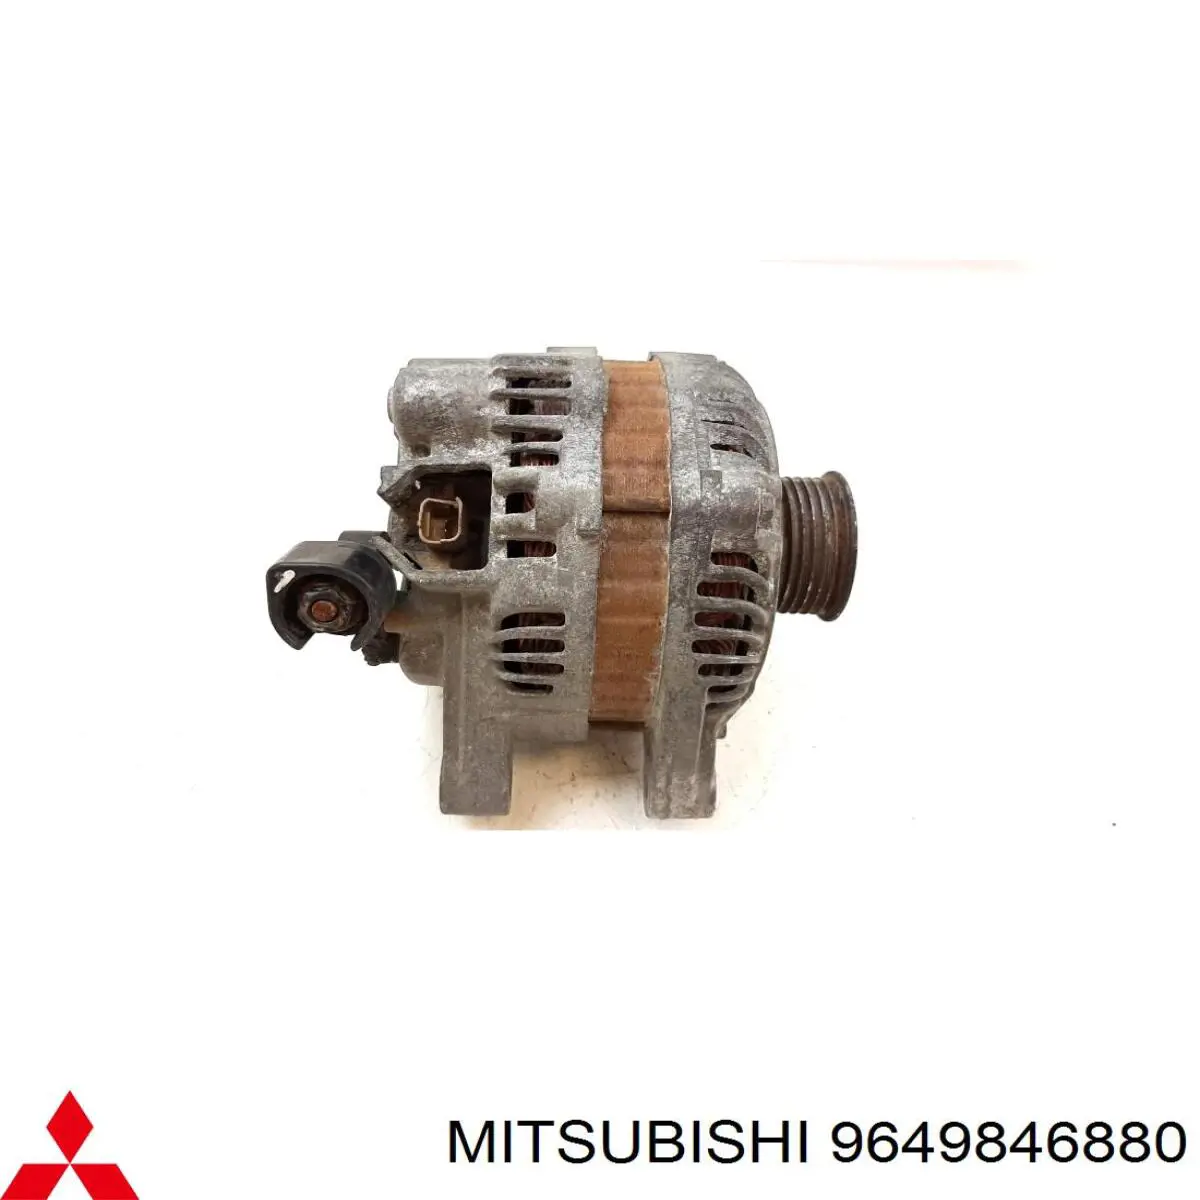 A3TG1891B Mitsubishi генератор